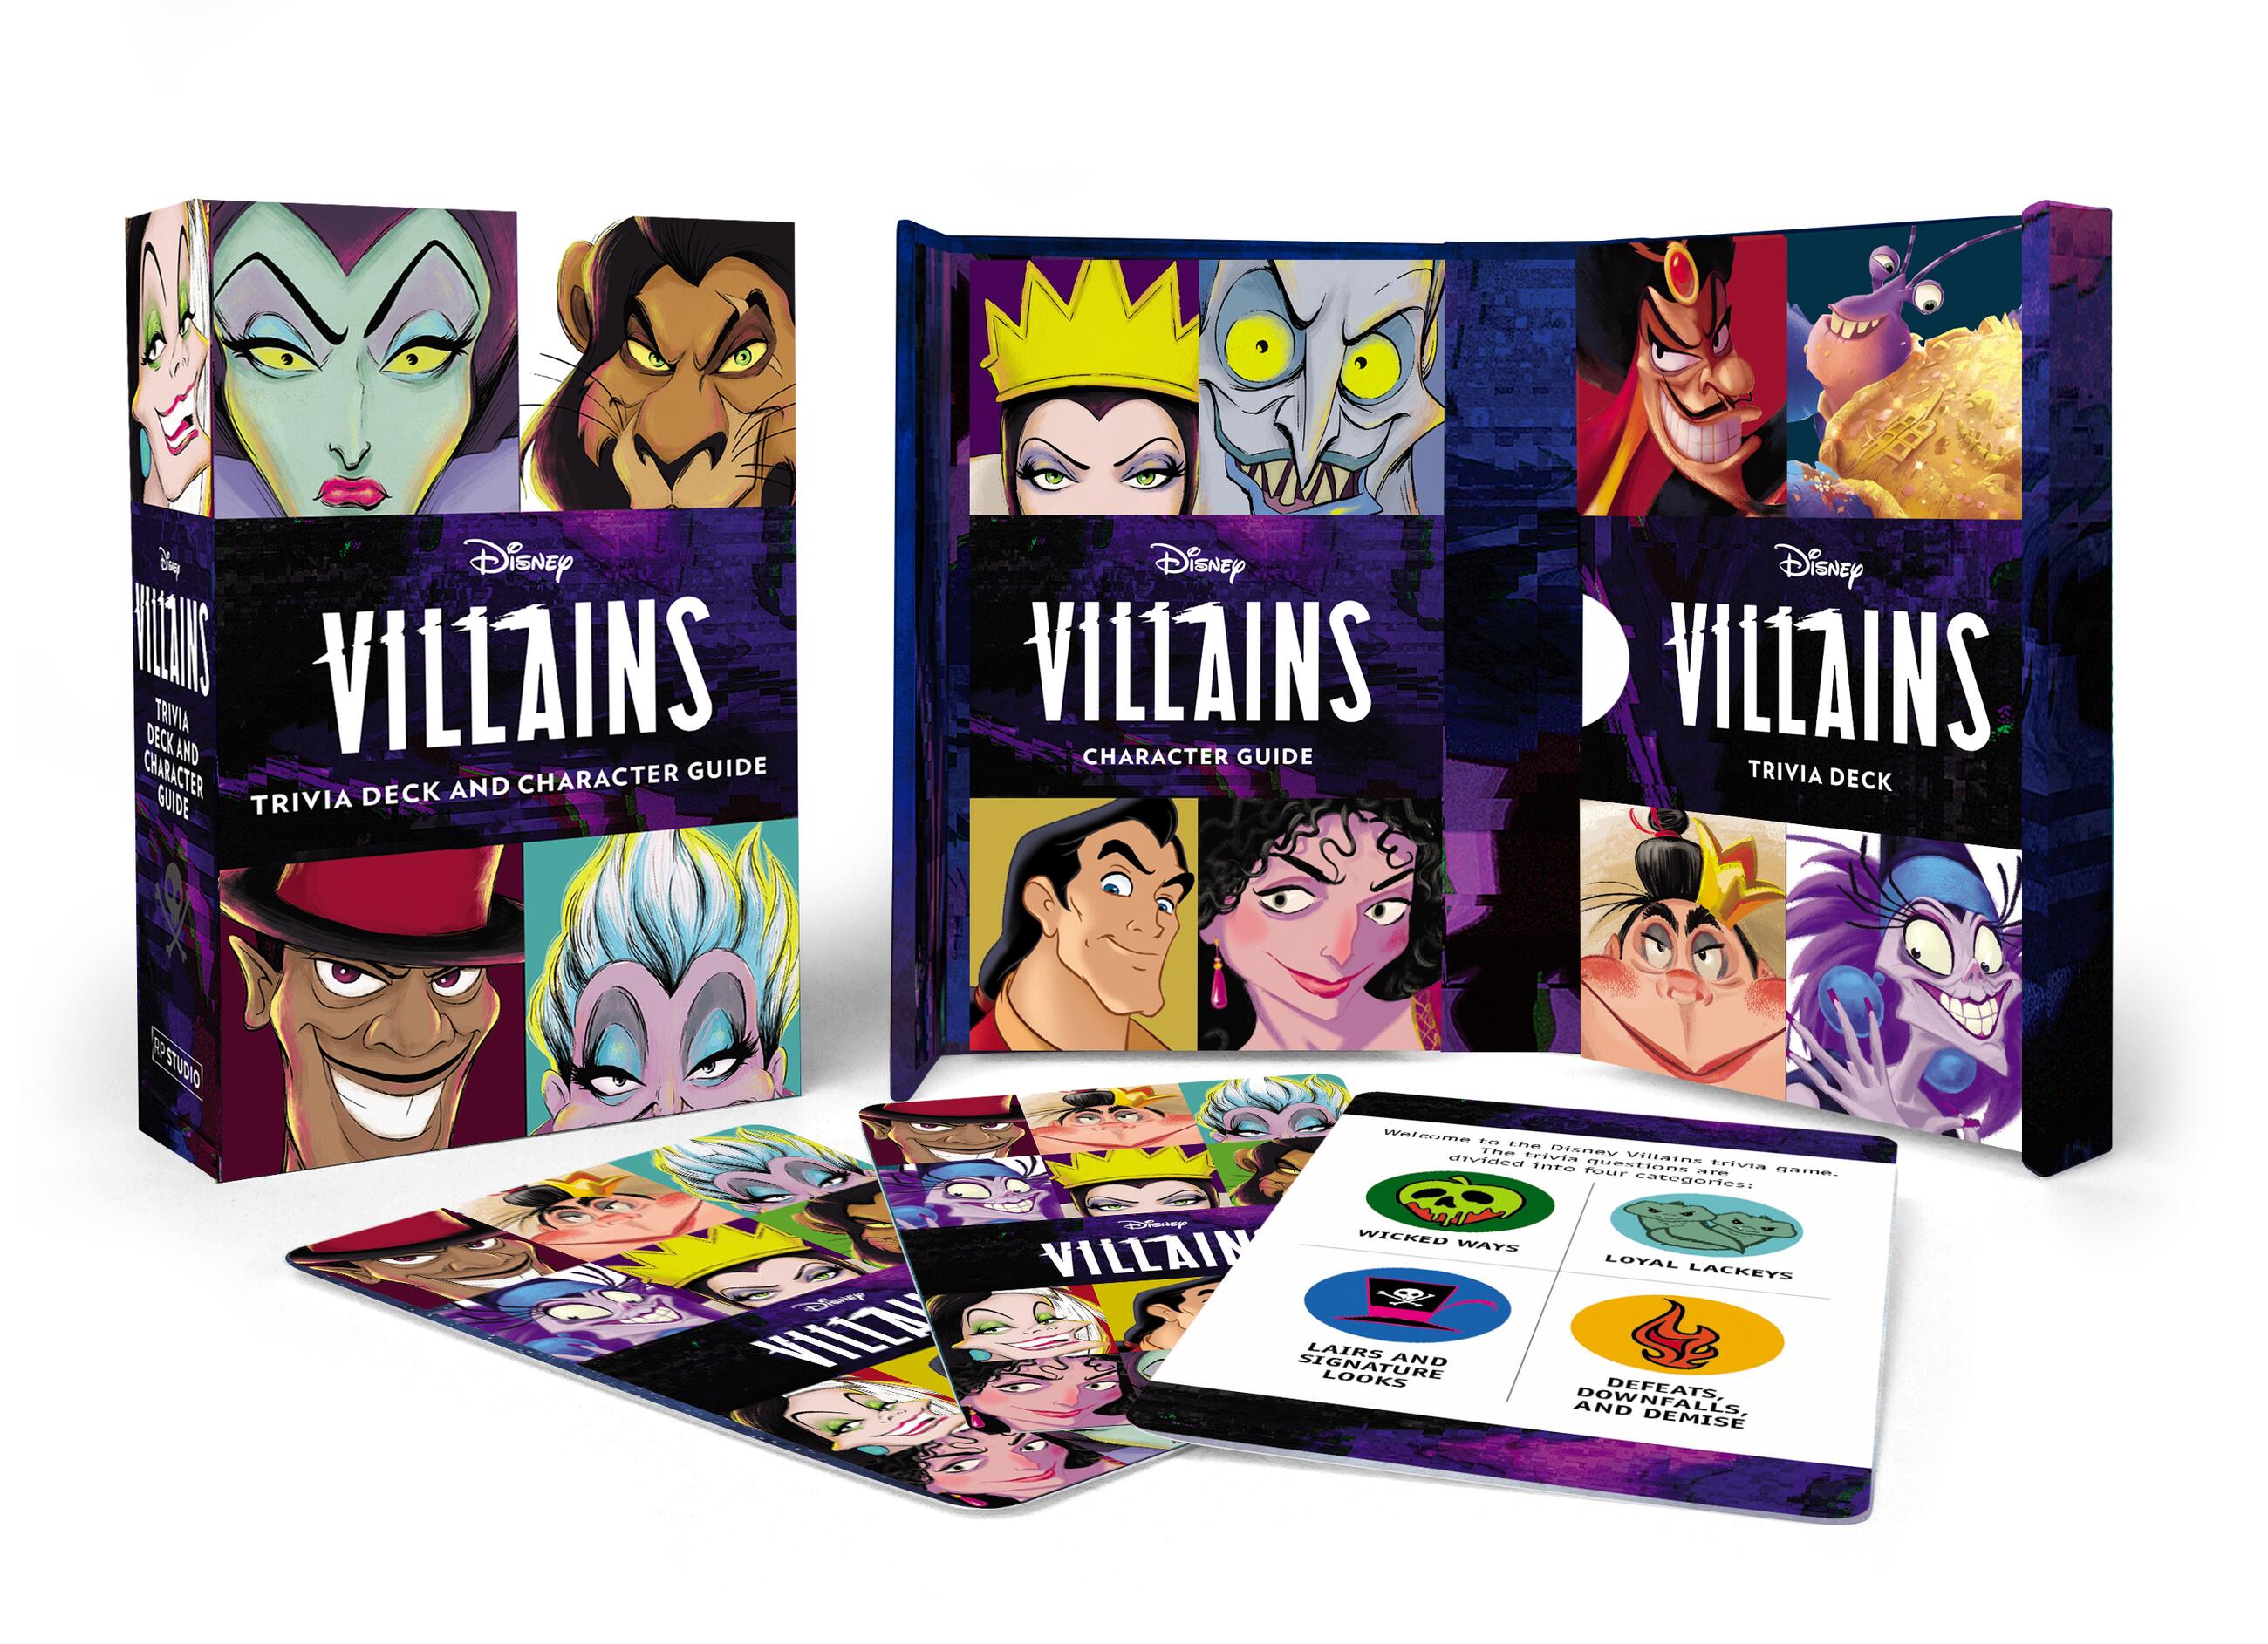 Disney Villains Trivia Deck and Character Guide by Christine Kopaczewski